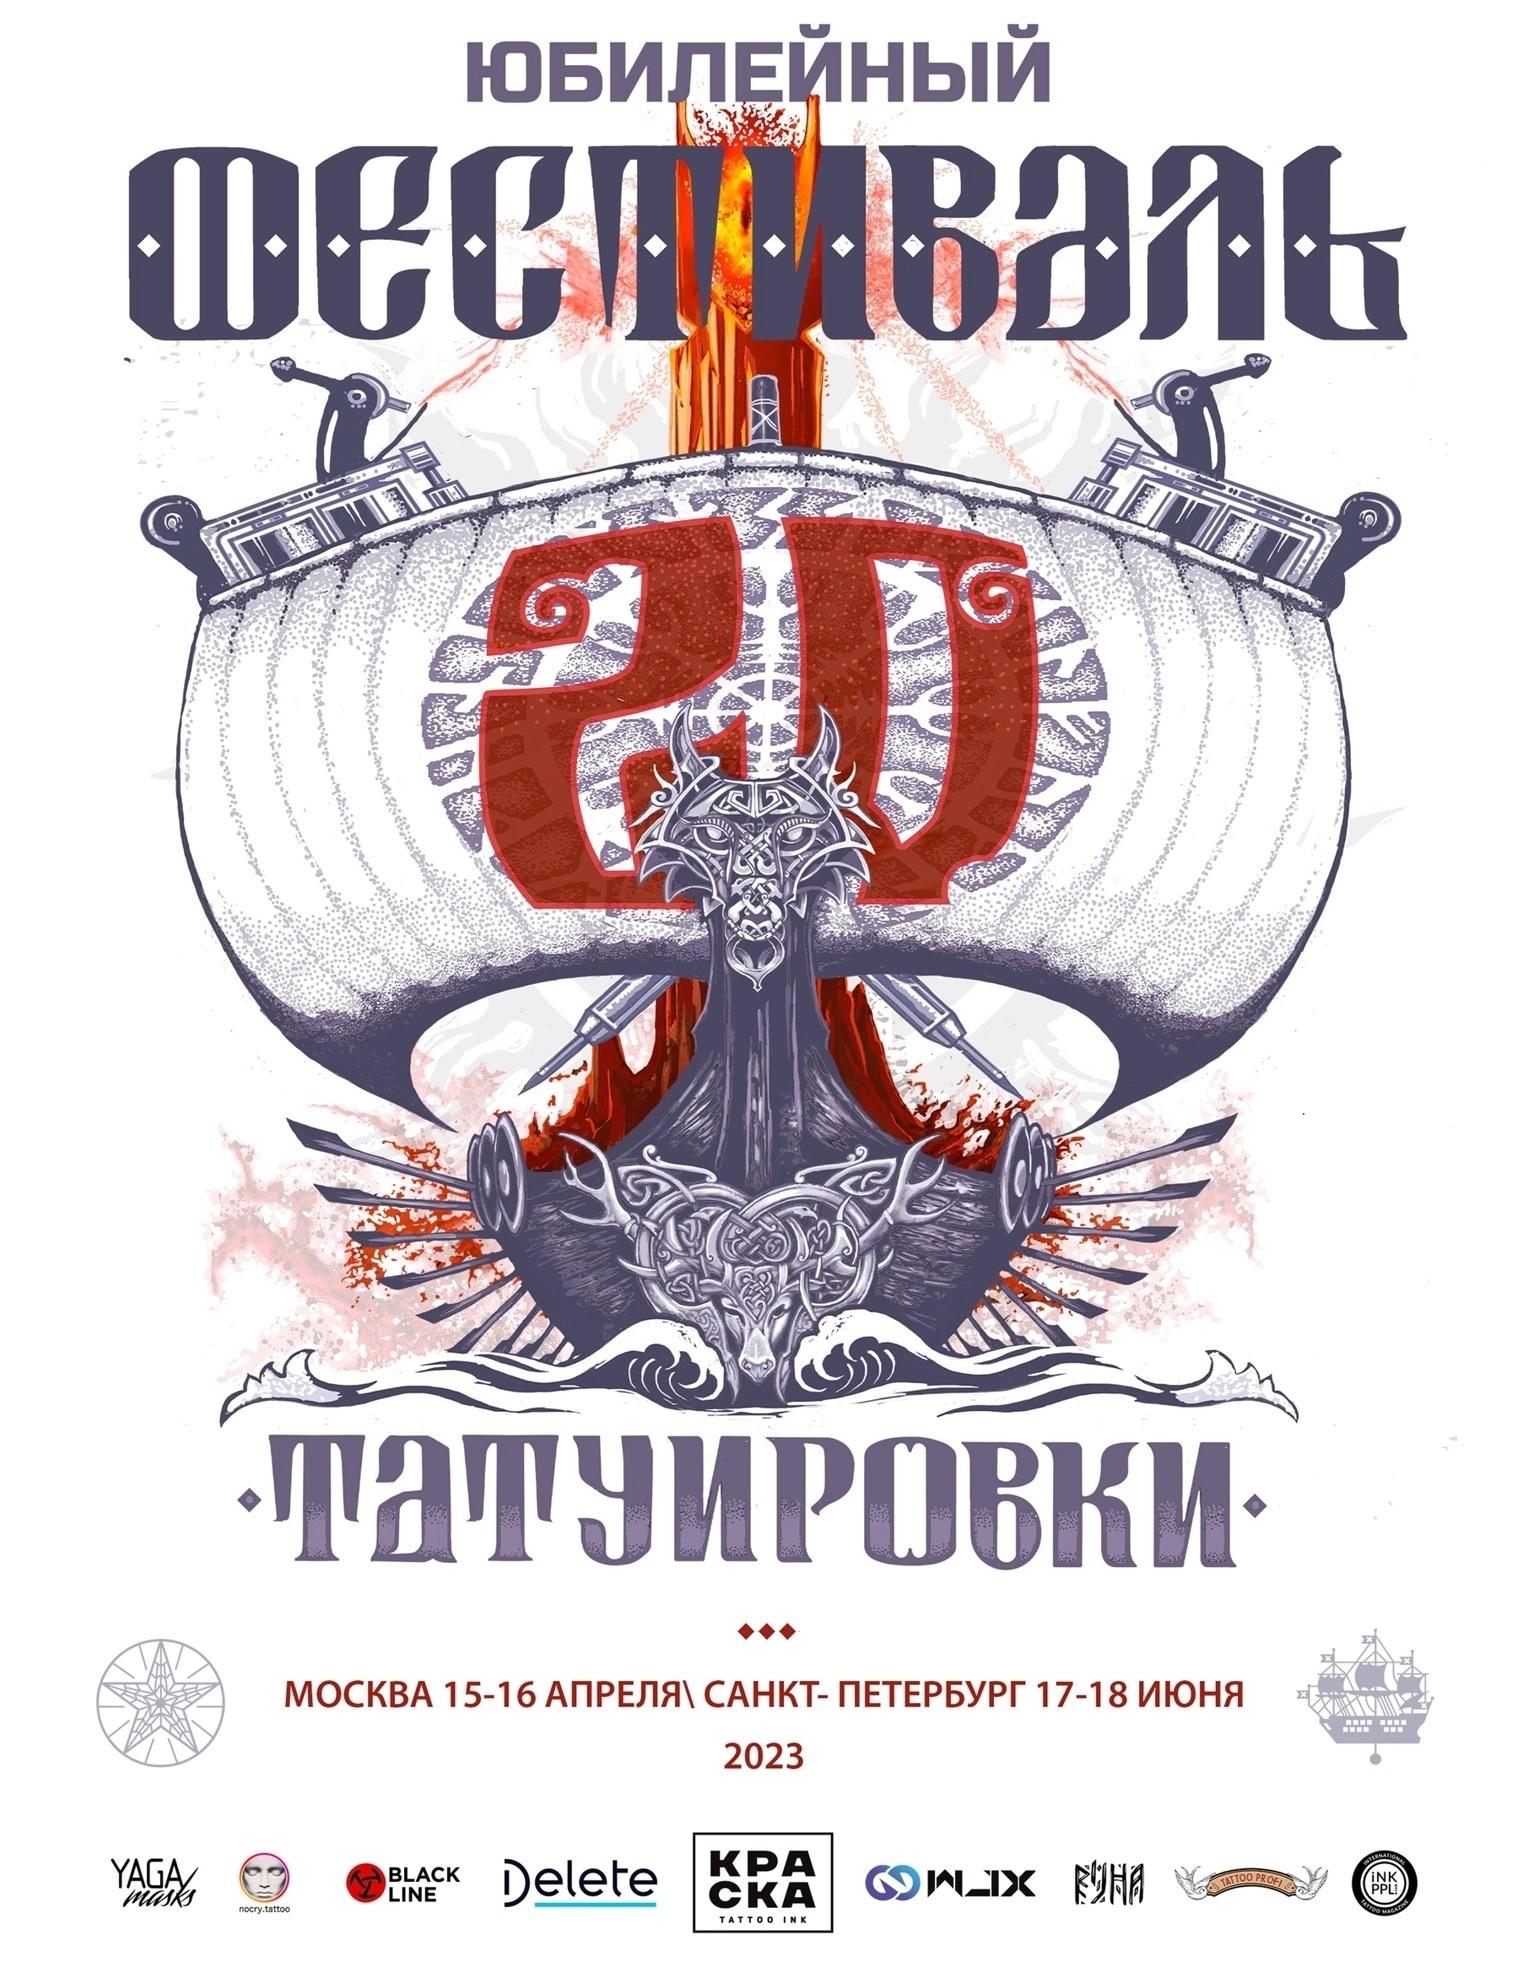 Партнёры XX Moscow Tattoo Festival